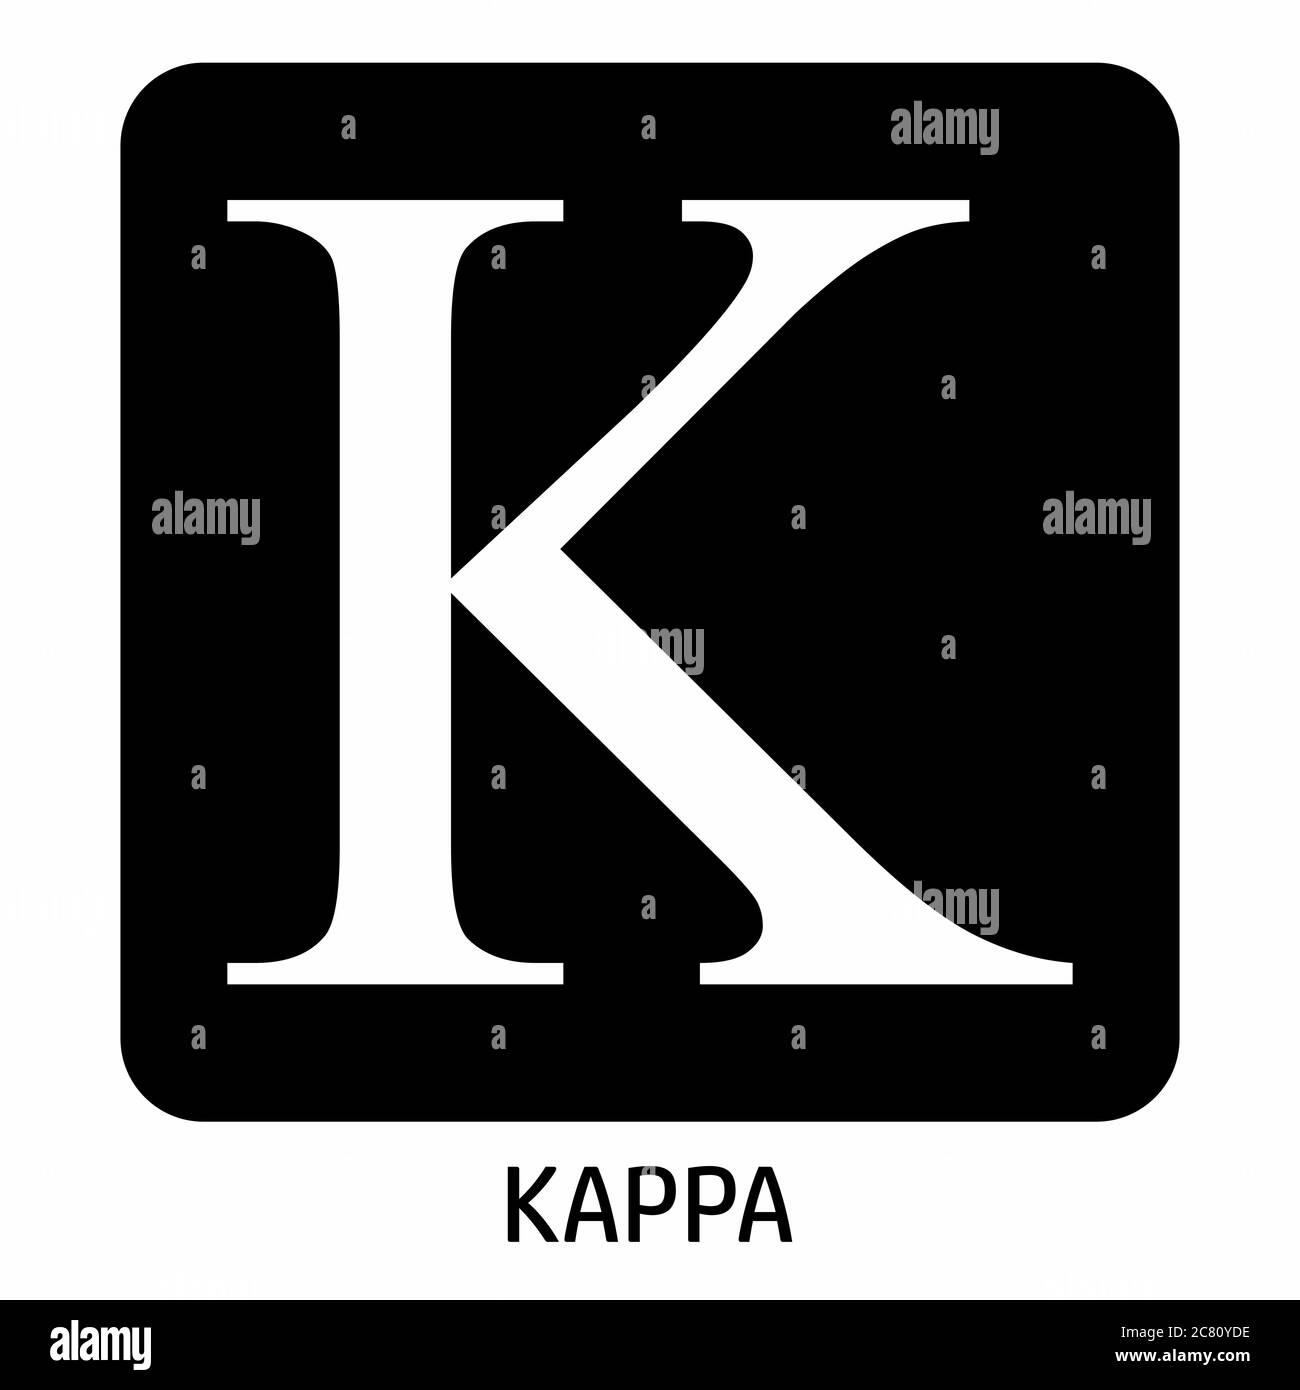 Kappa greek letter icon Stock Vector Image & Art - Alamy